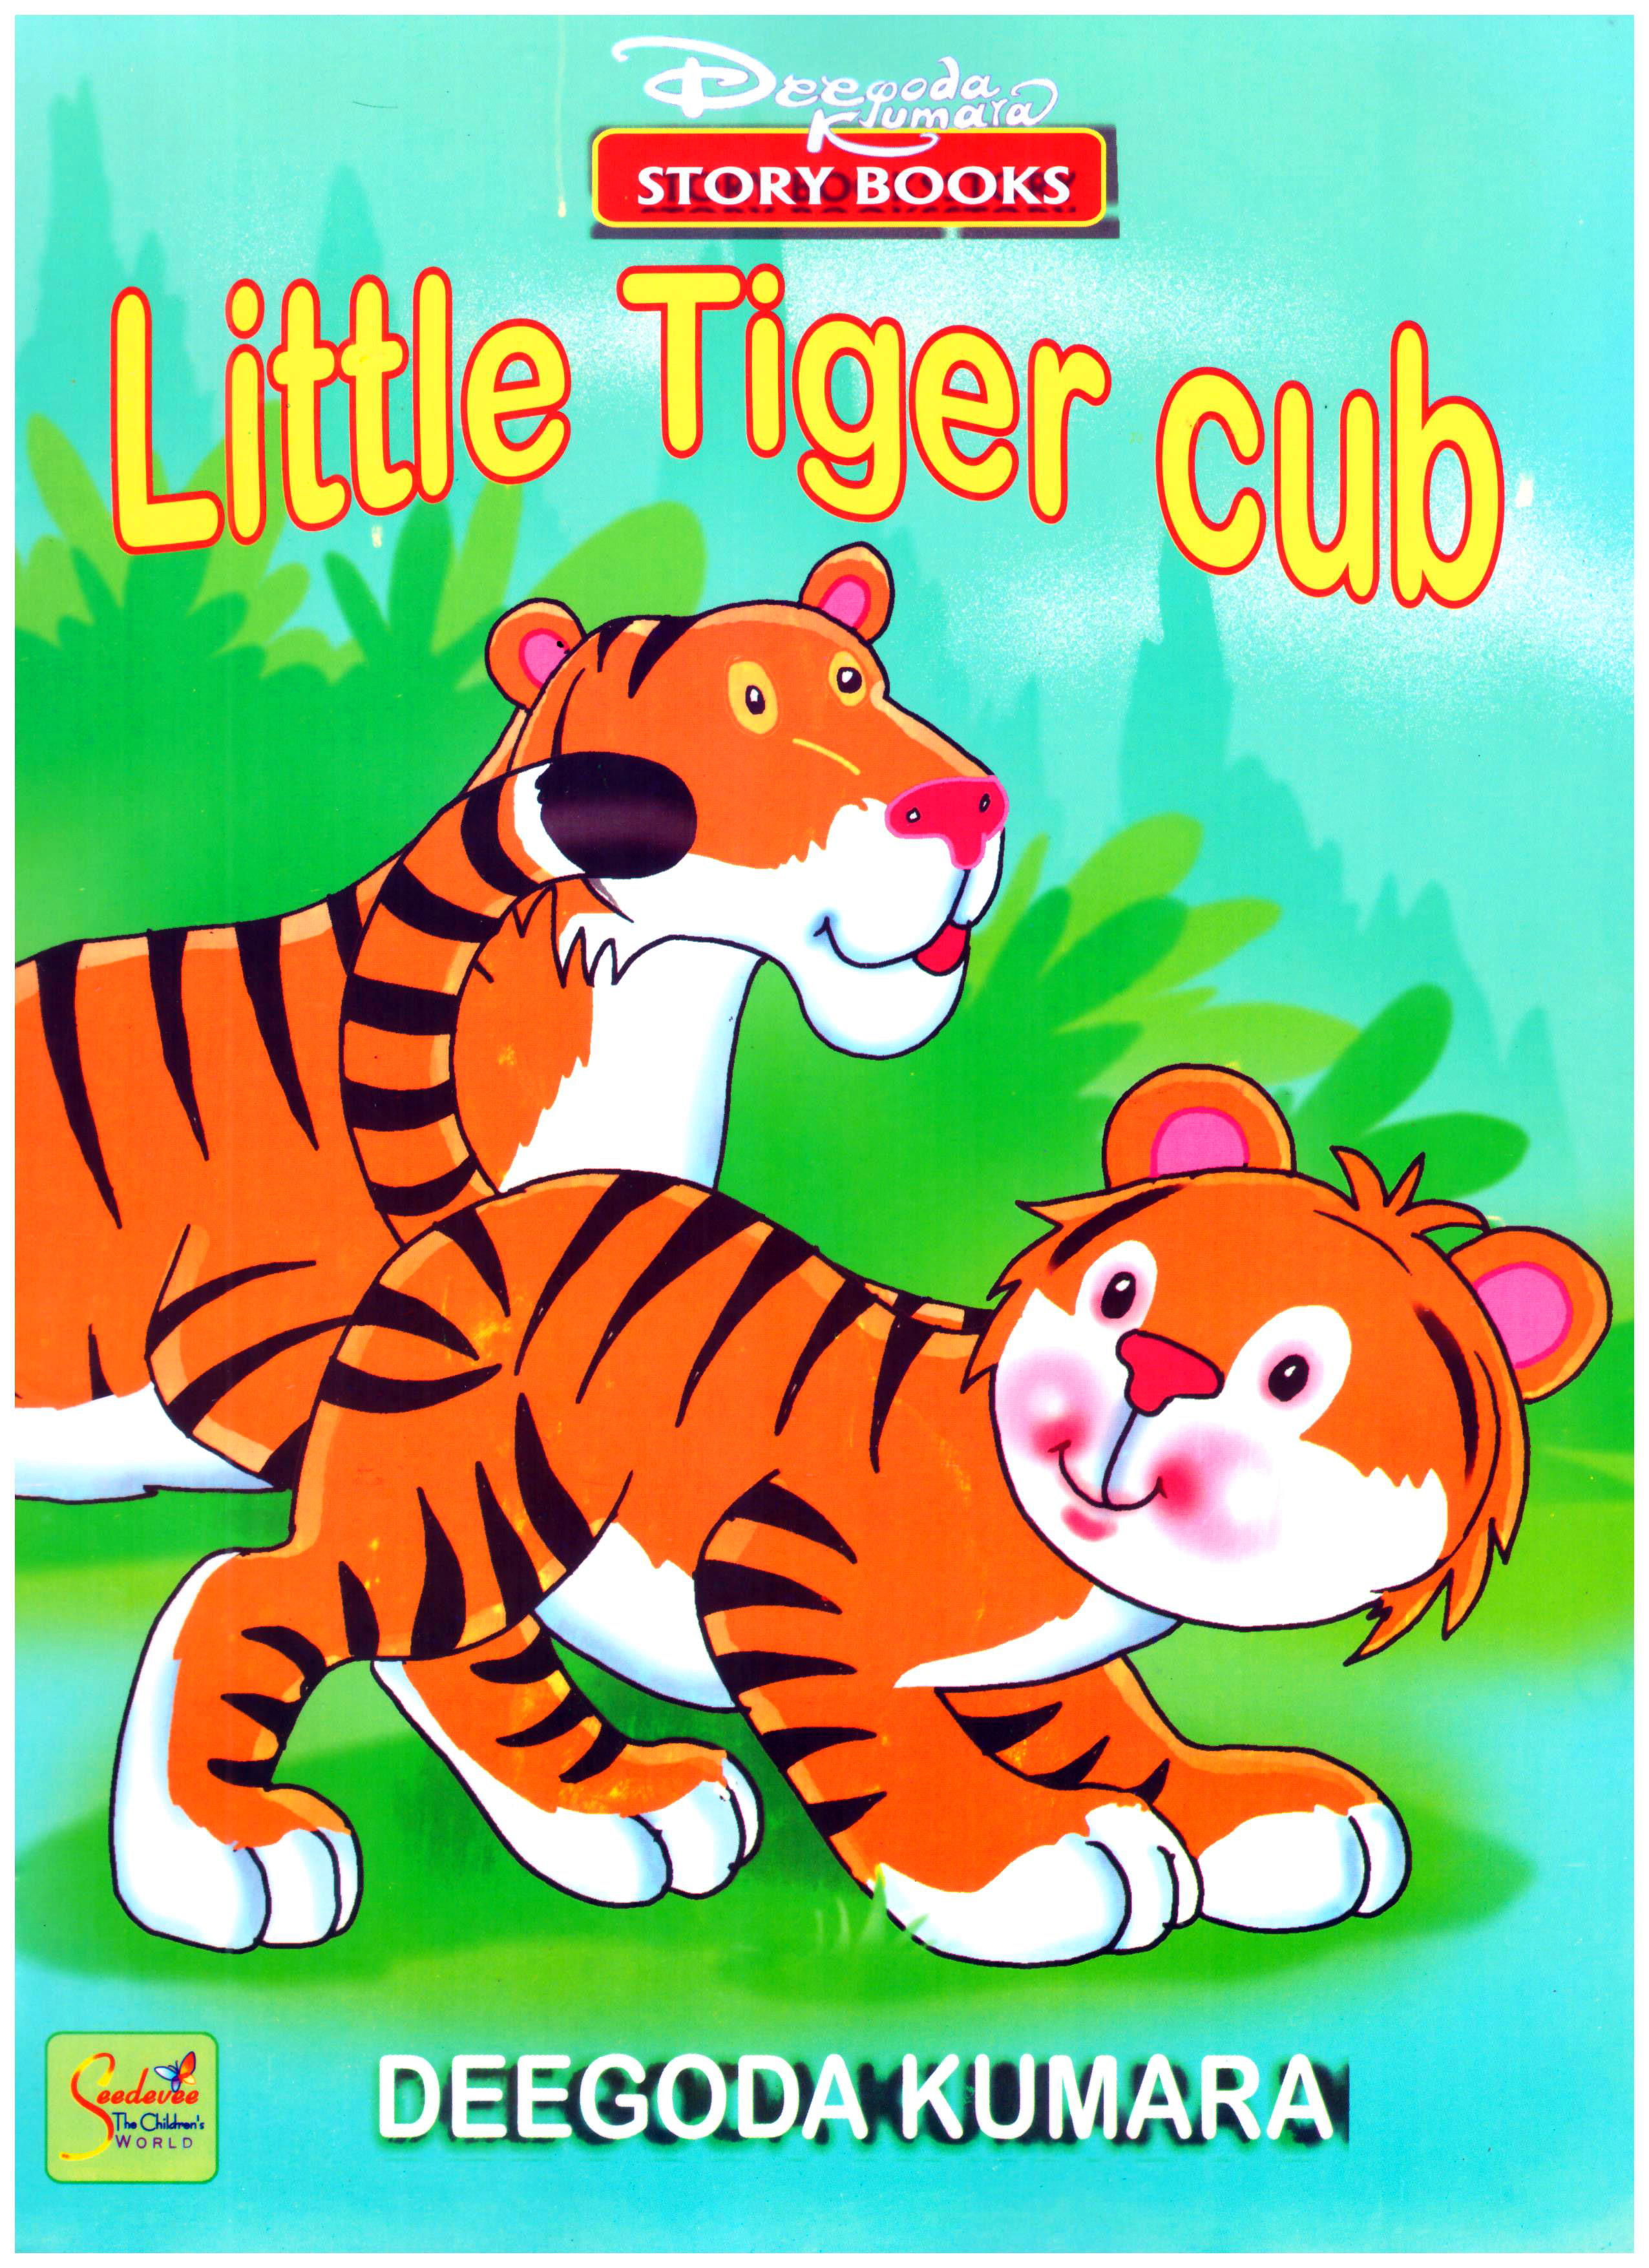 Little Tiger Cub